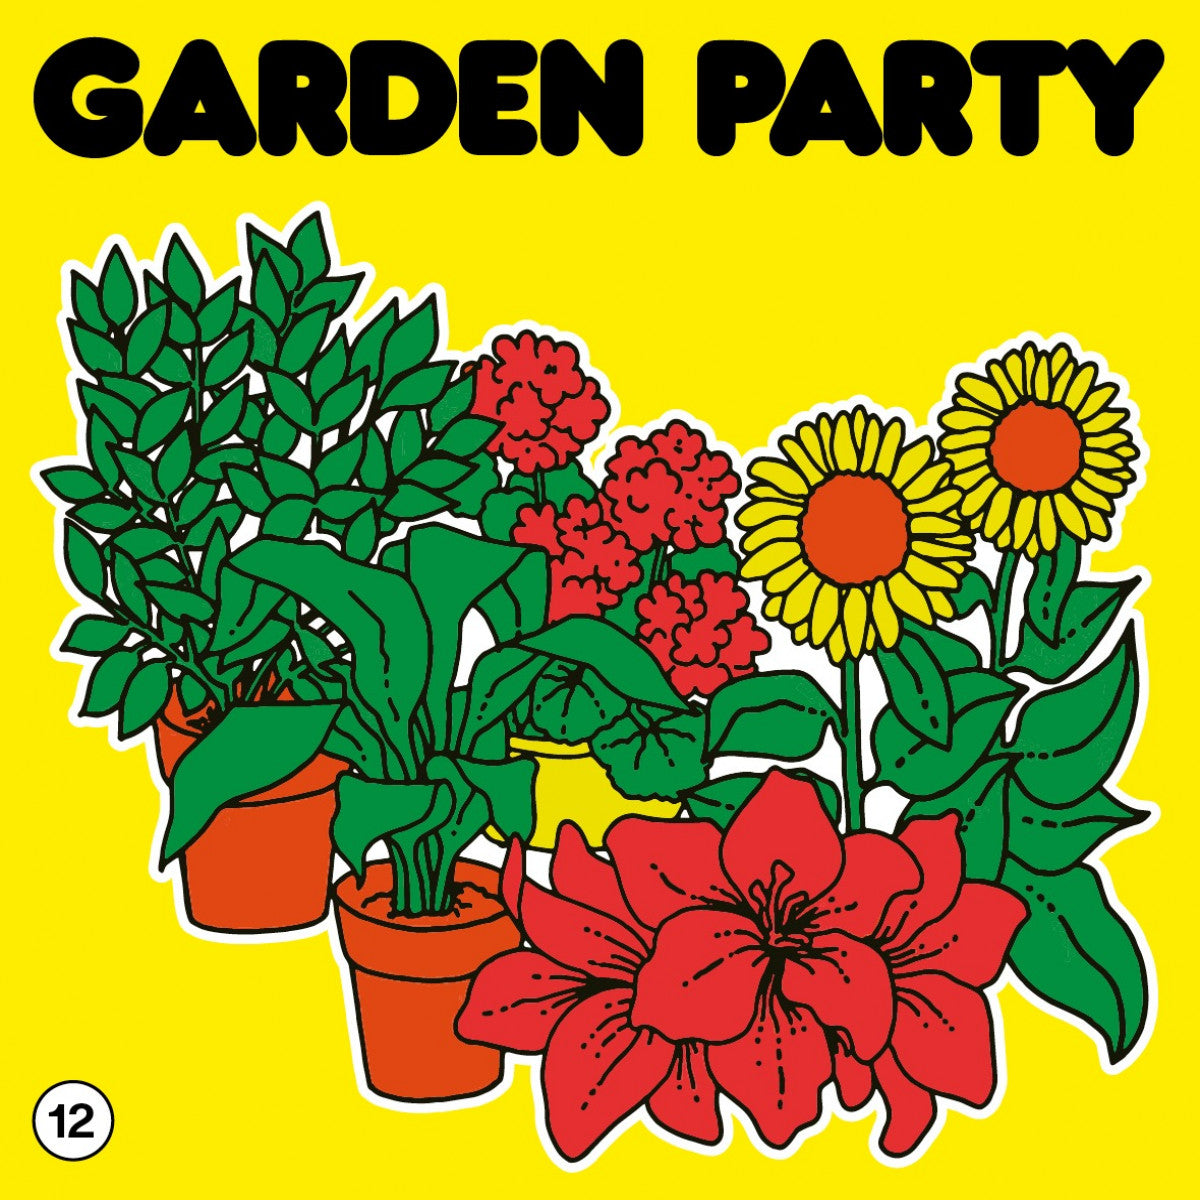 Markus Sommer - Garden Party